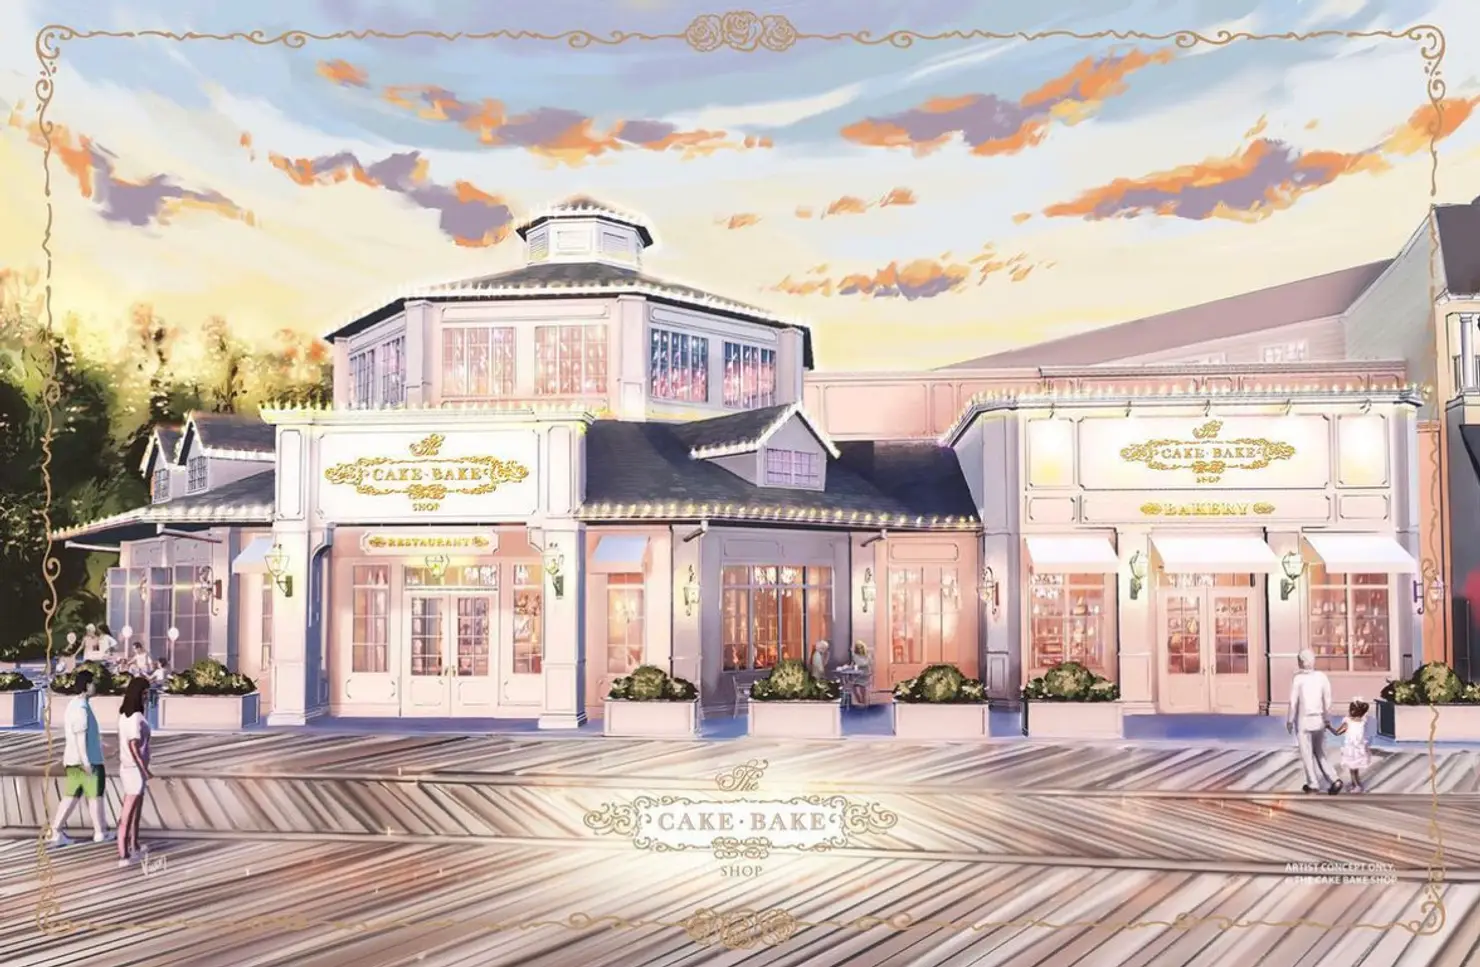 Cake Bake Shop Restaurant Coming to Disney World in 2024 - Disney Tourist  Blog